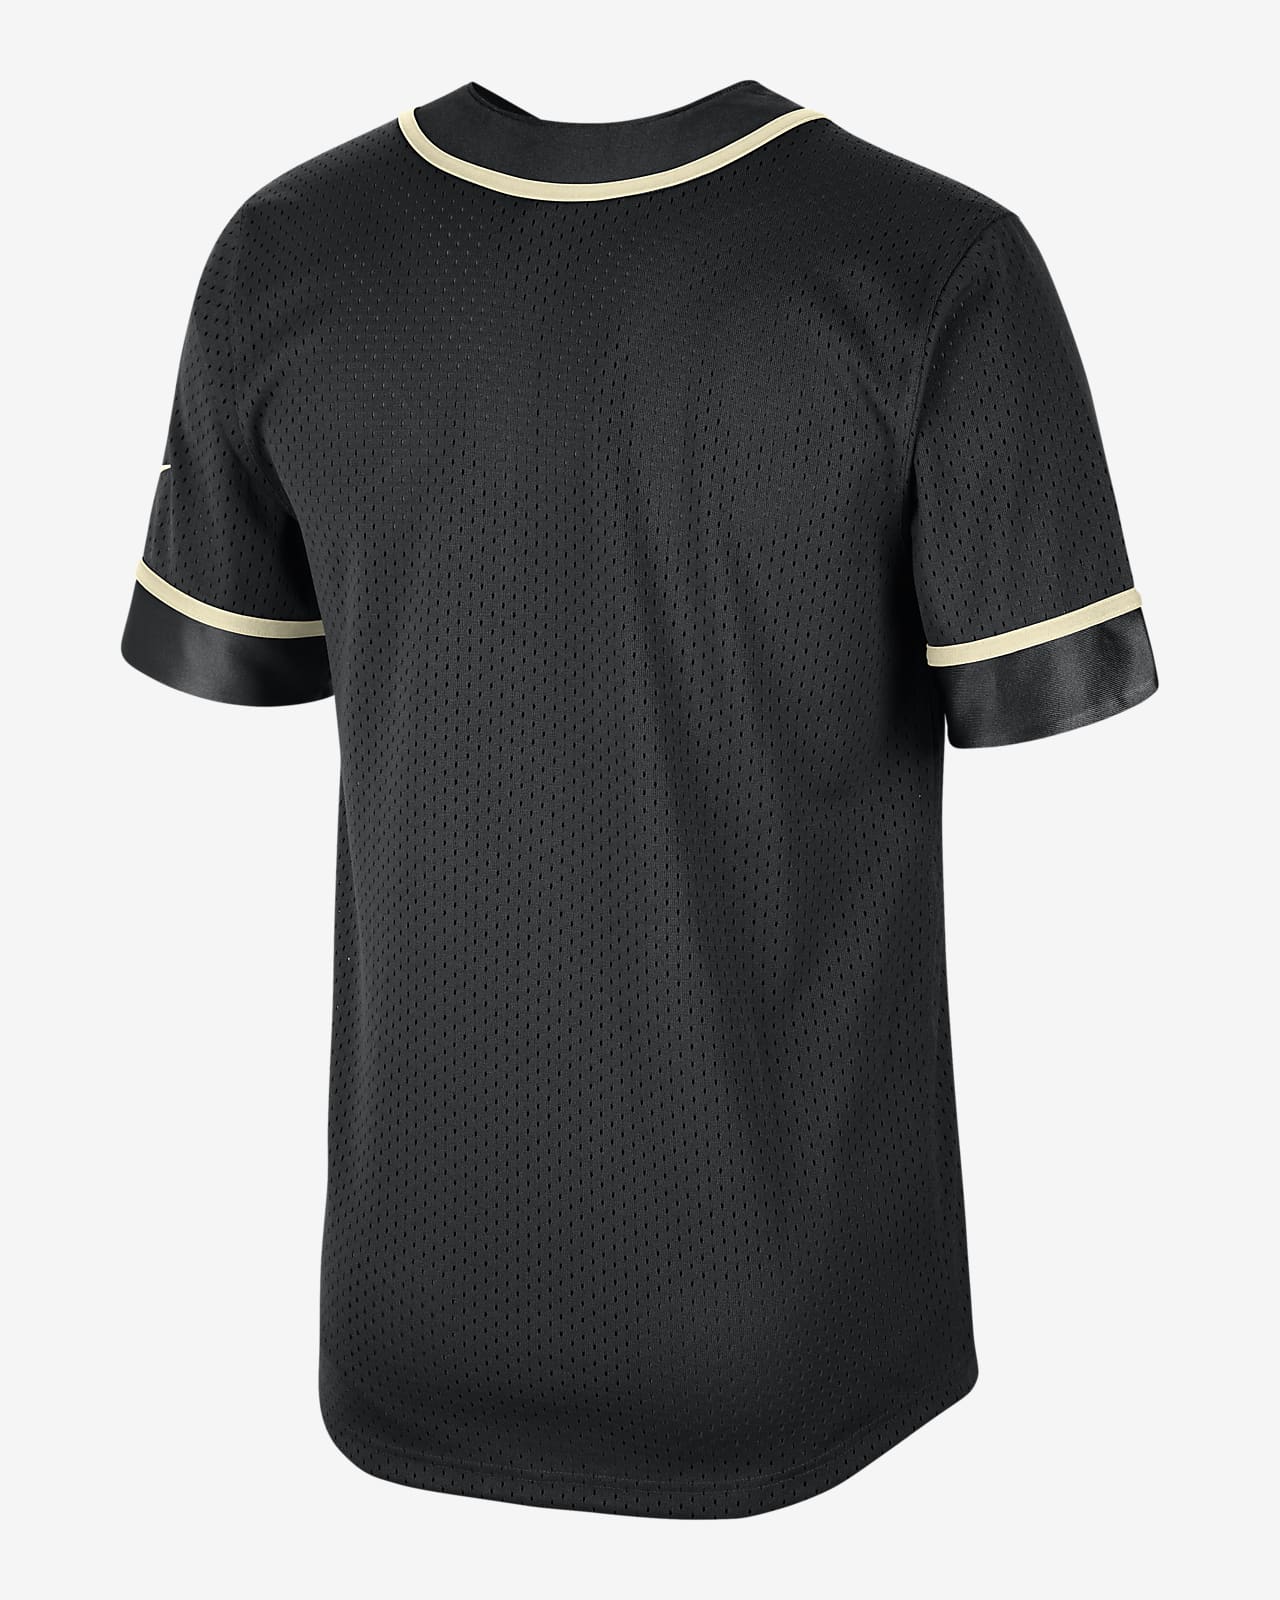 Nike Men's Milwaukee Bucks Black Dri-Fit Practice Long Sleeve T-Shirt, Large